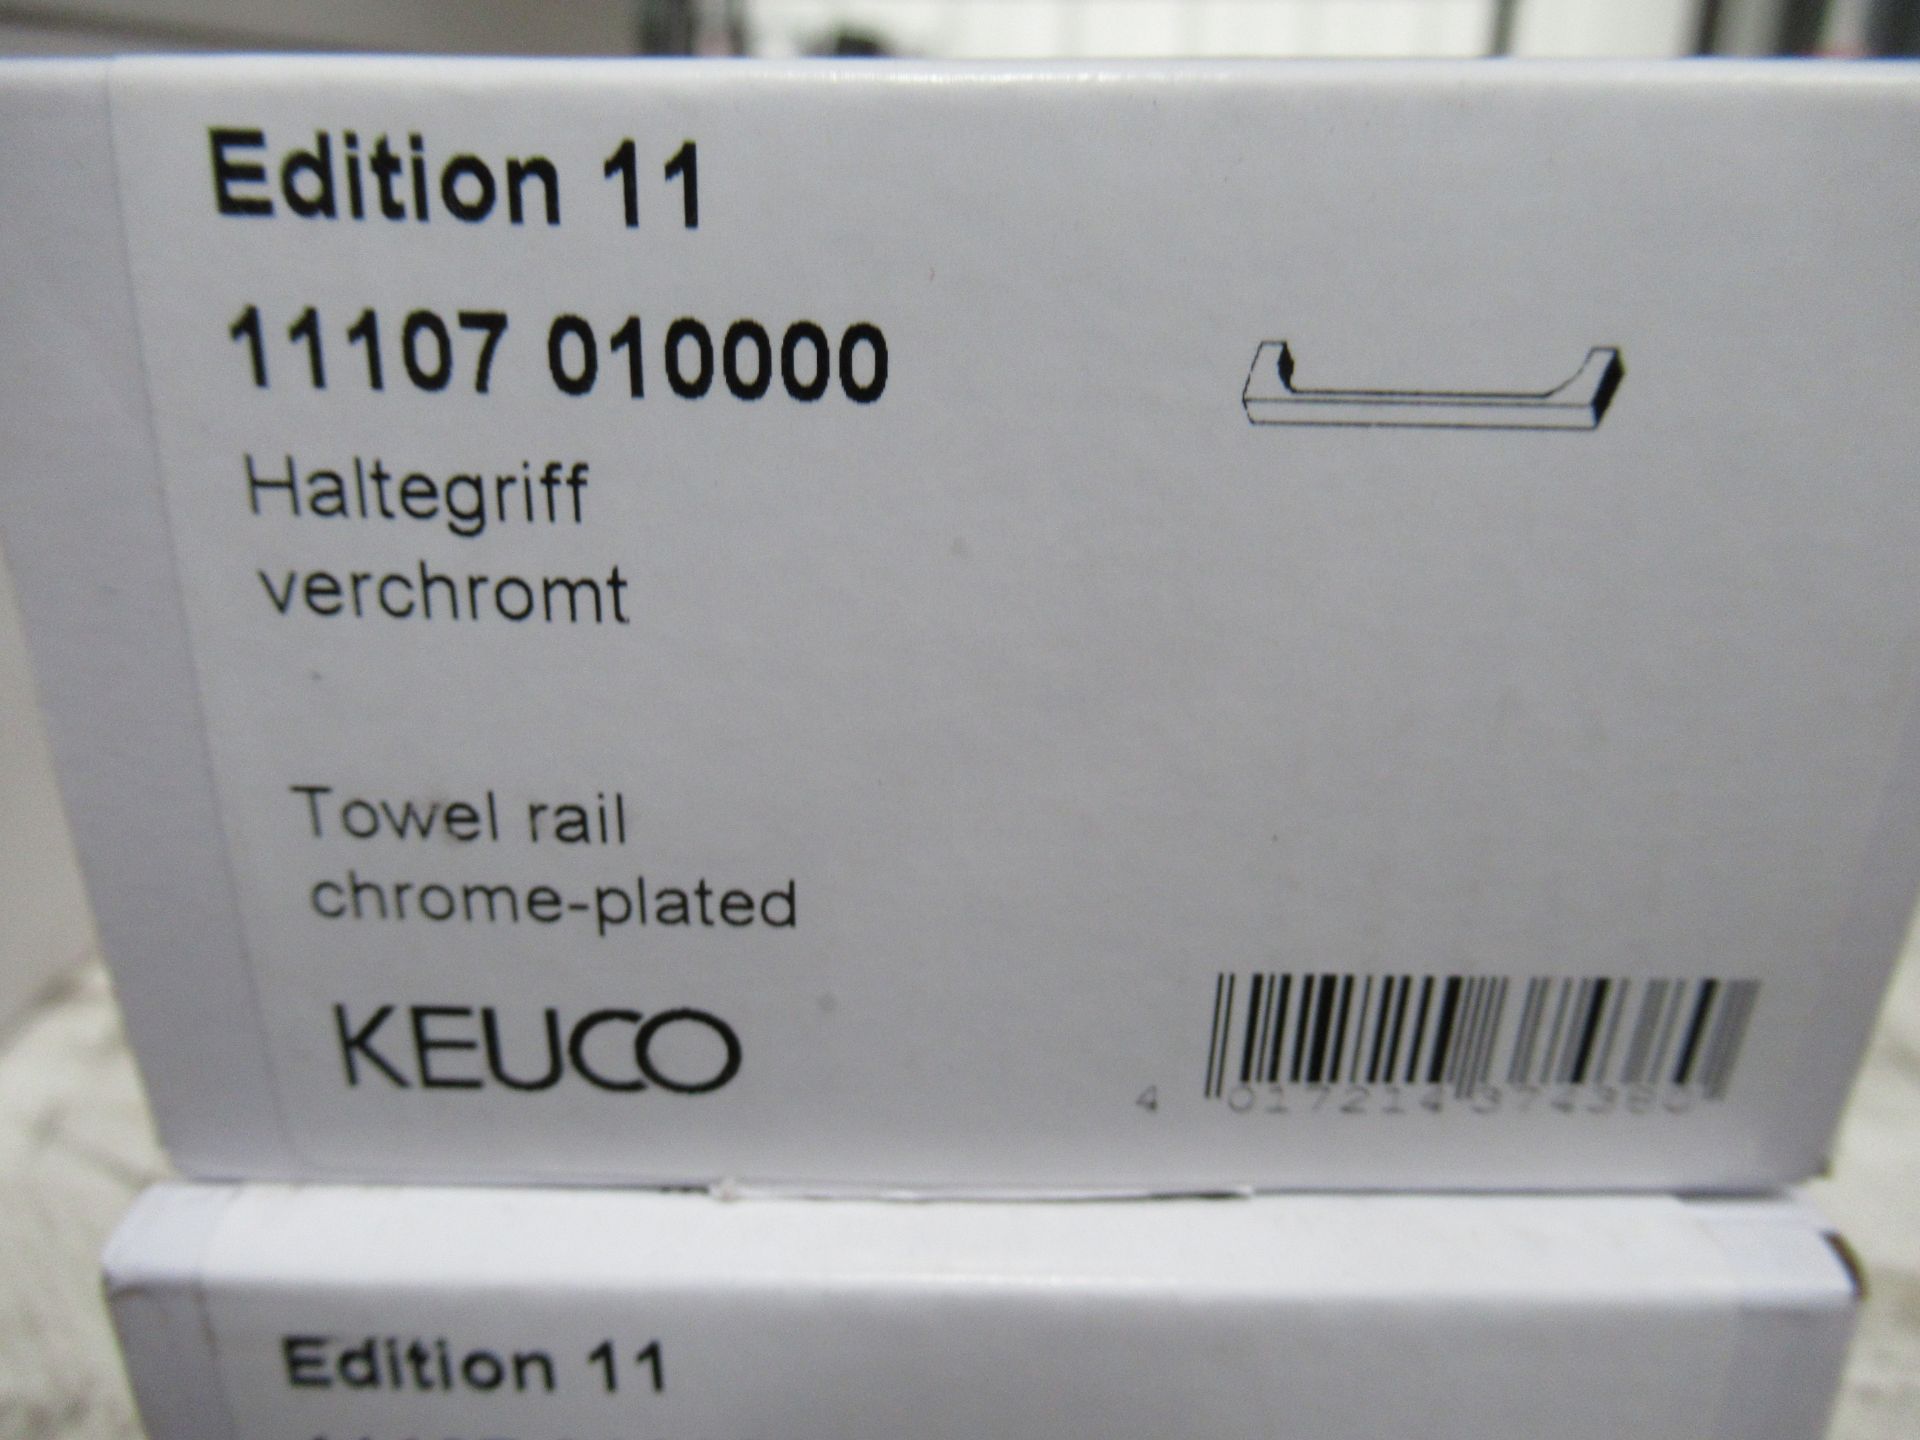 2 x Keuco Edition II Towel Rails, Chrome Plated, P/N 11107-010000 - Image 2 of 2